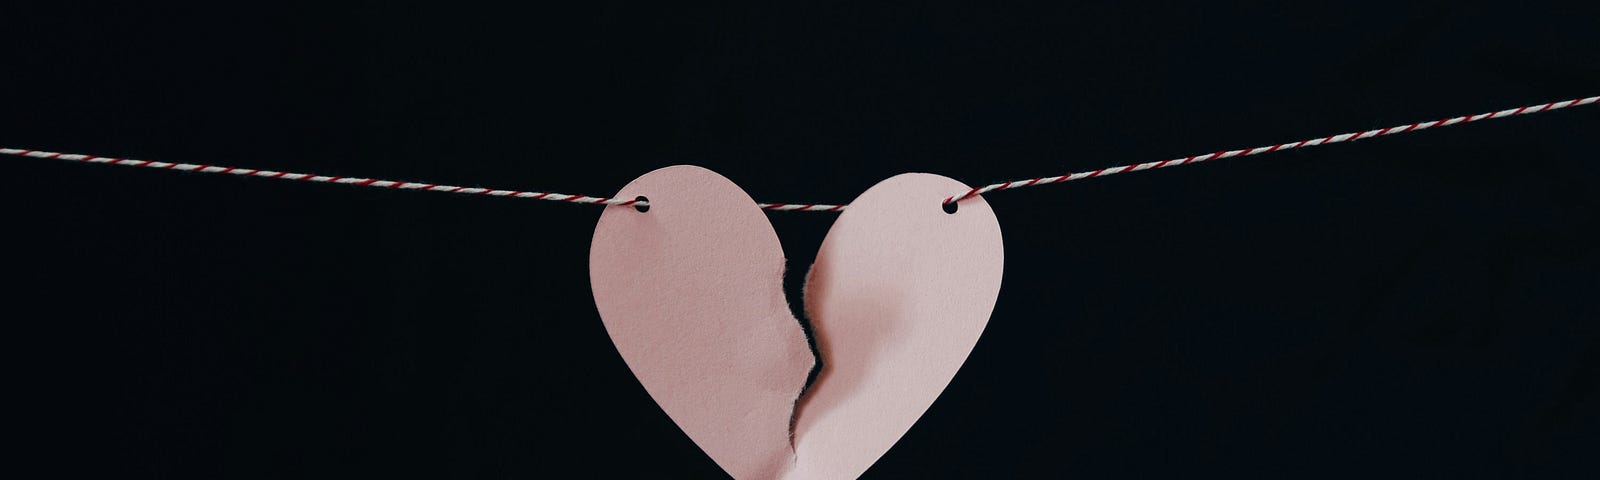 A broken paper heart hangs on a string.